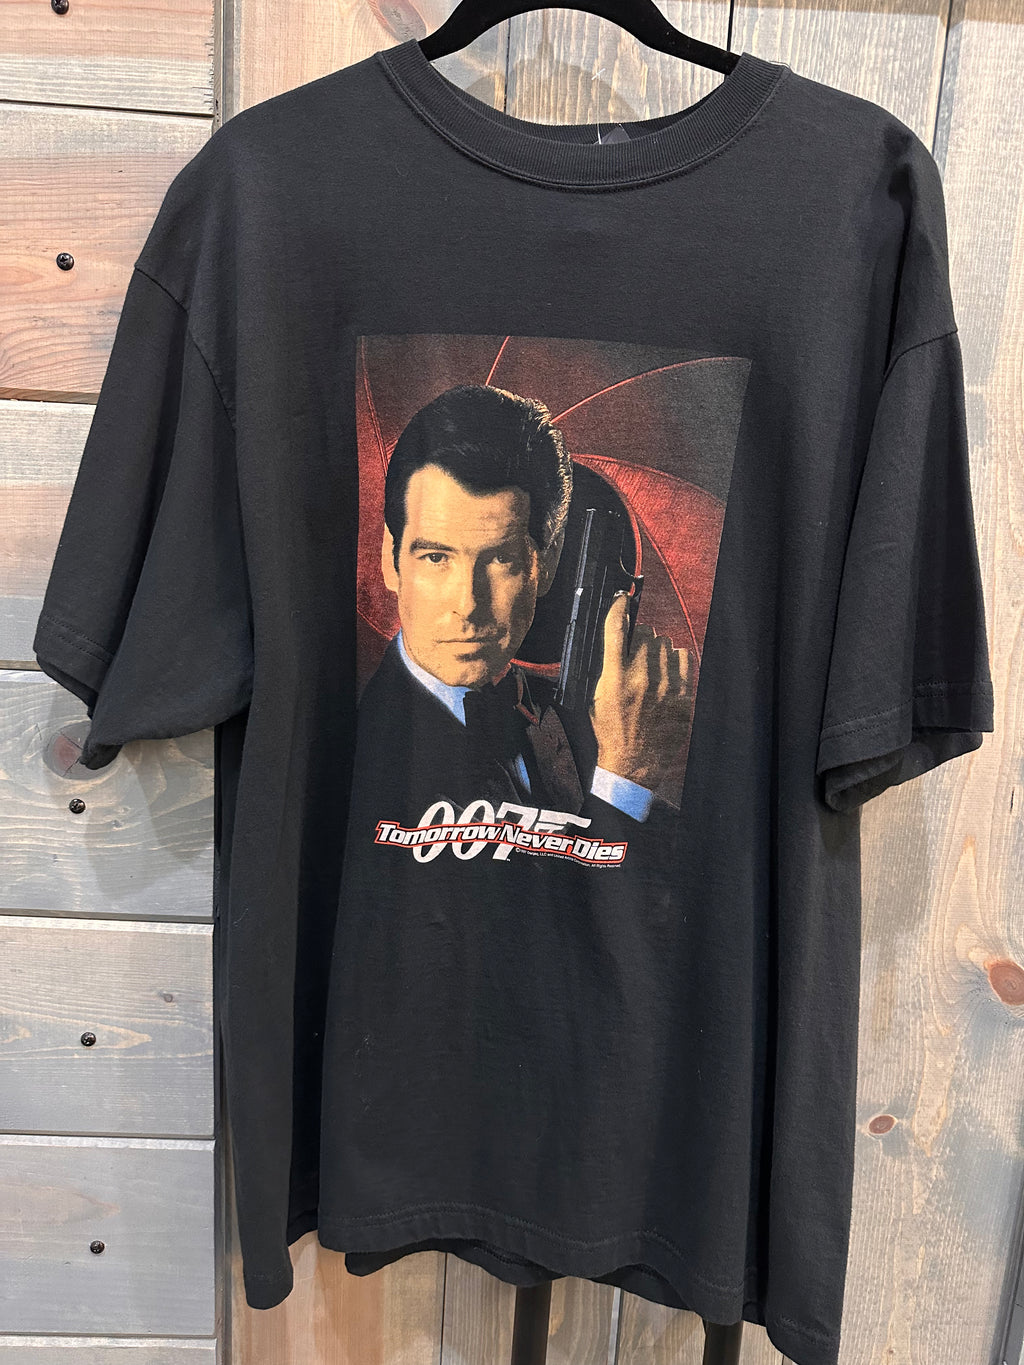 007 Tomorrow Never Dies Shirt